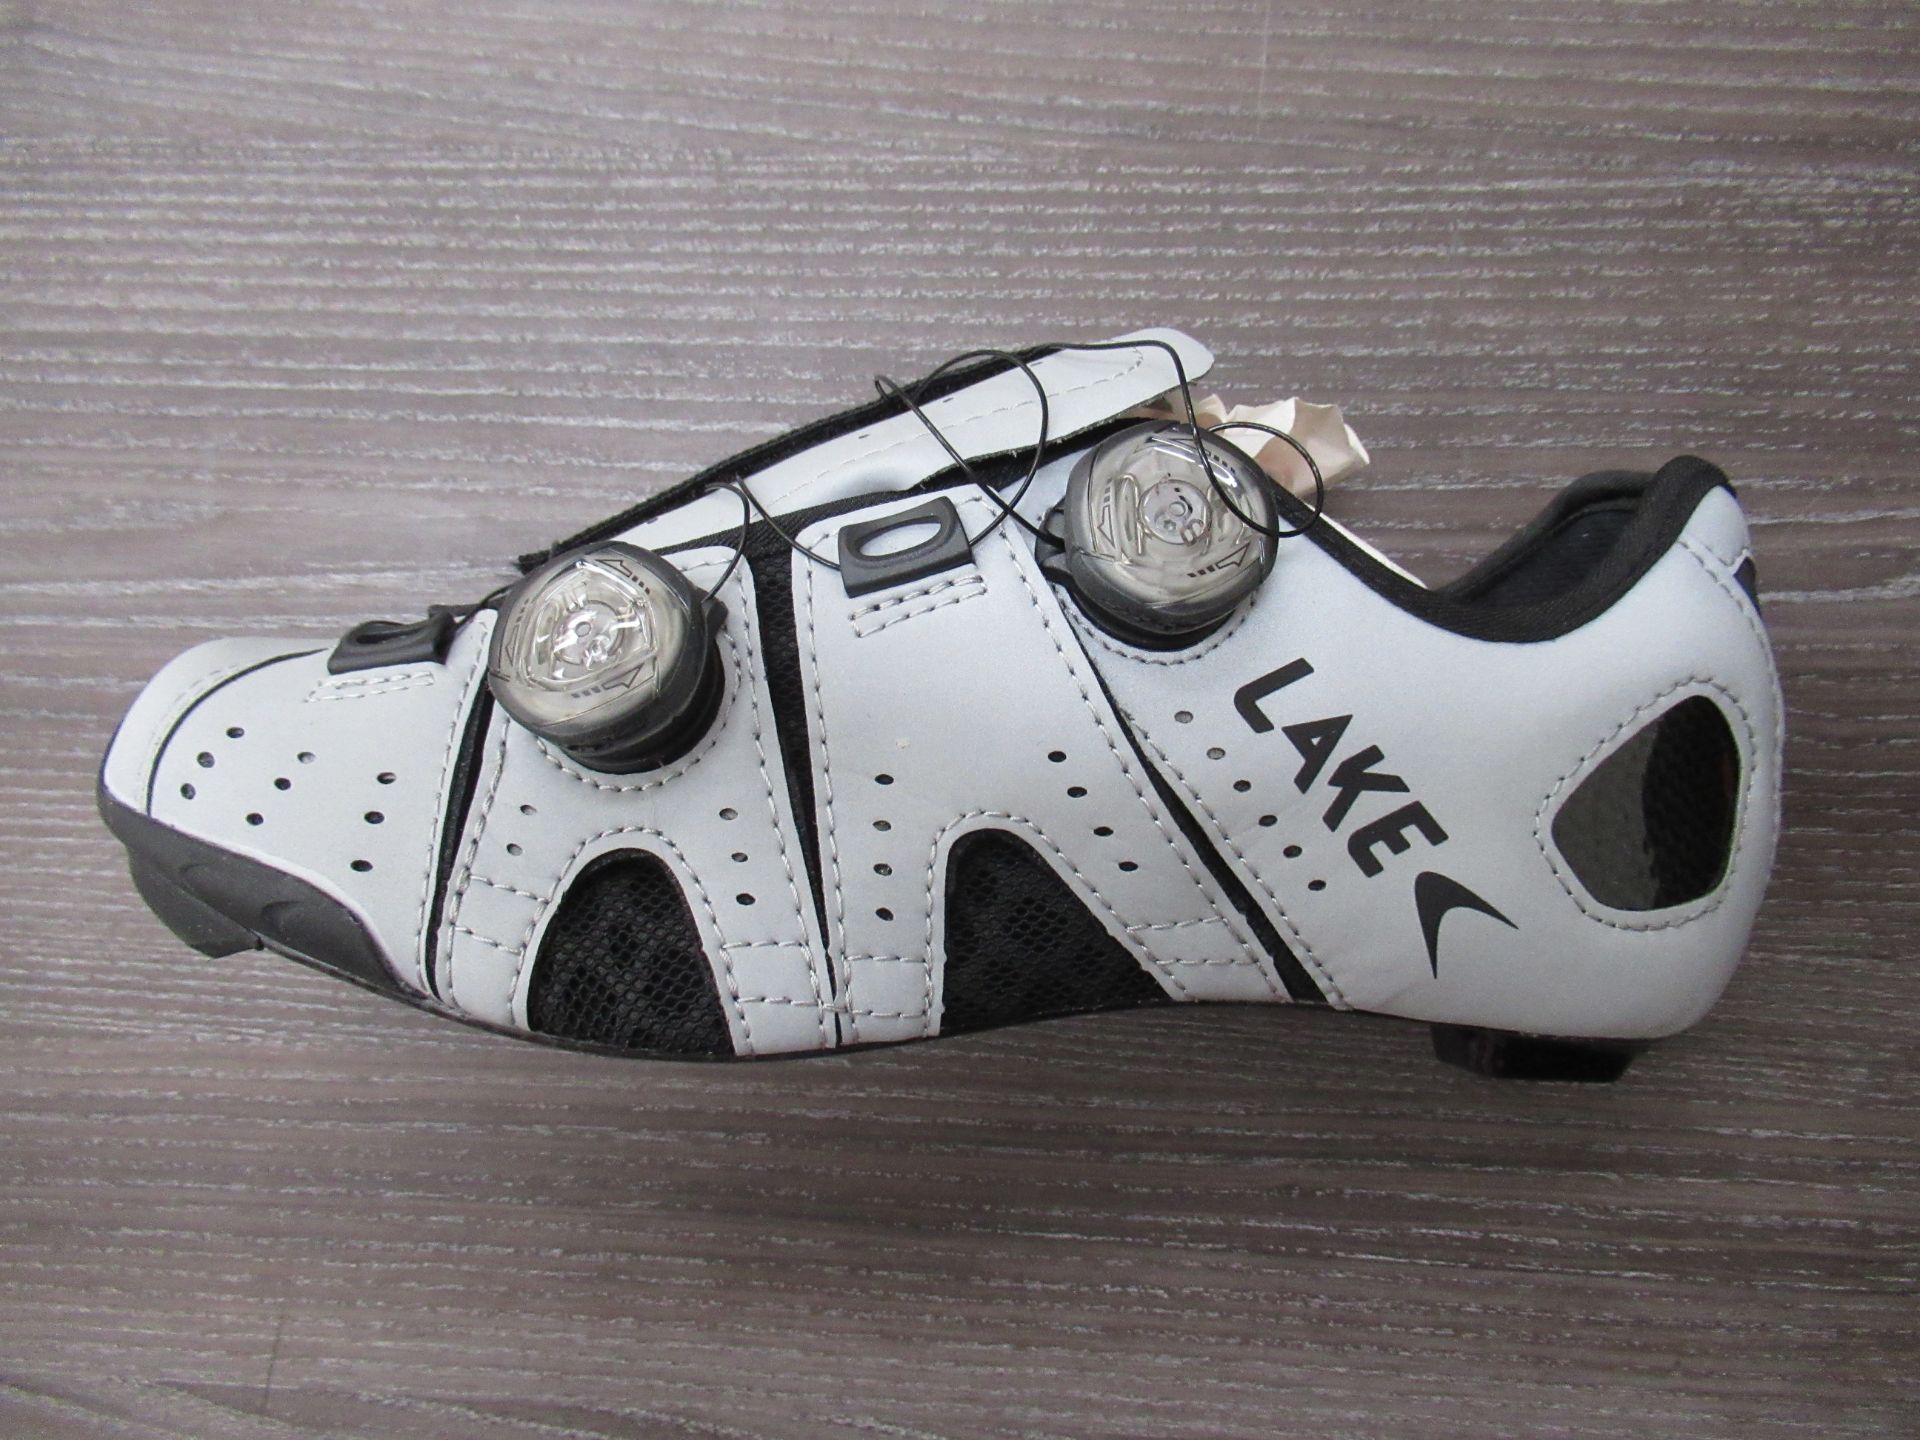 Pair of Lake CX241-X cycling shoes (reflective silver/grey) - boxed EU size 39.5 (RRP£295)